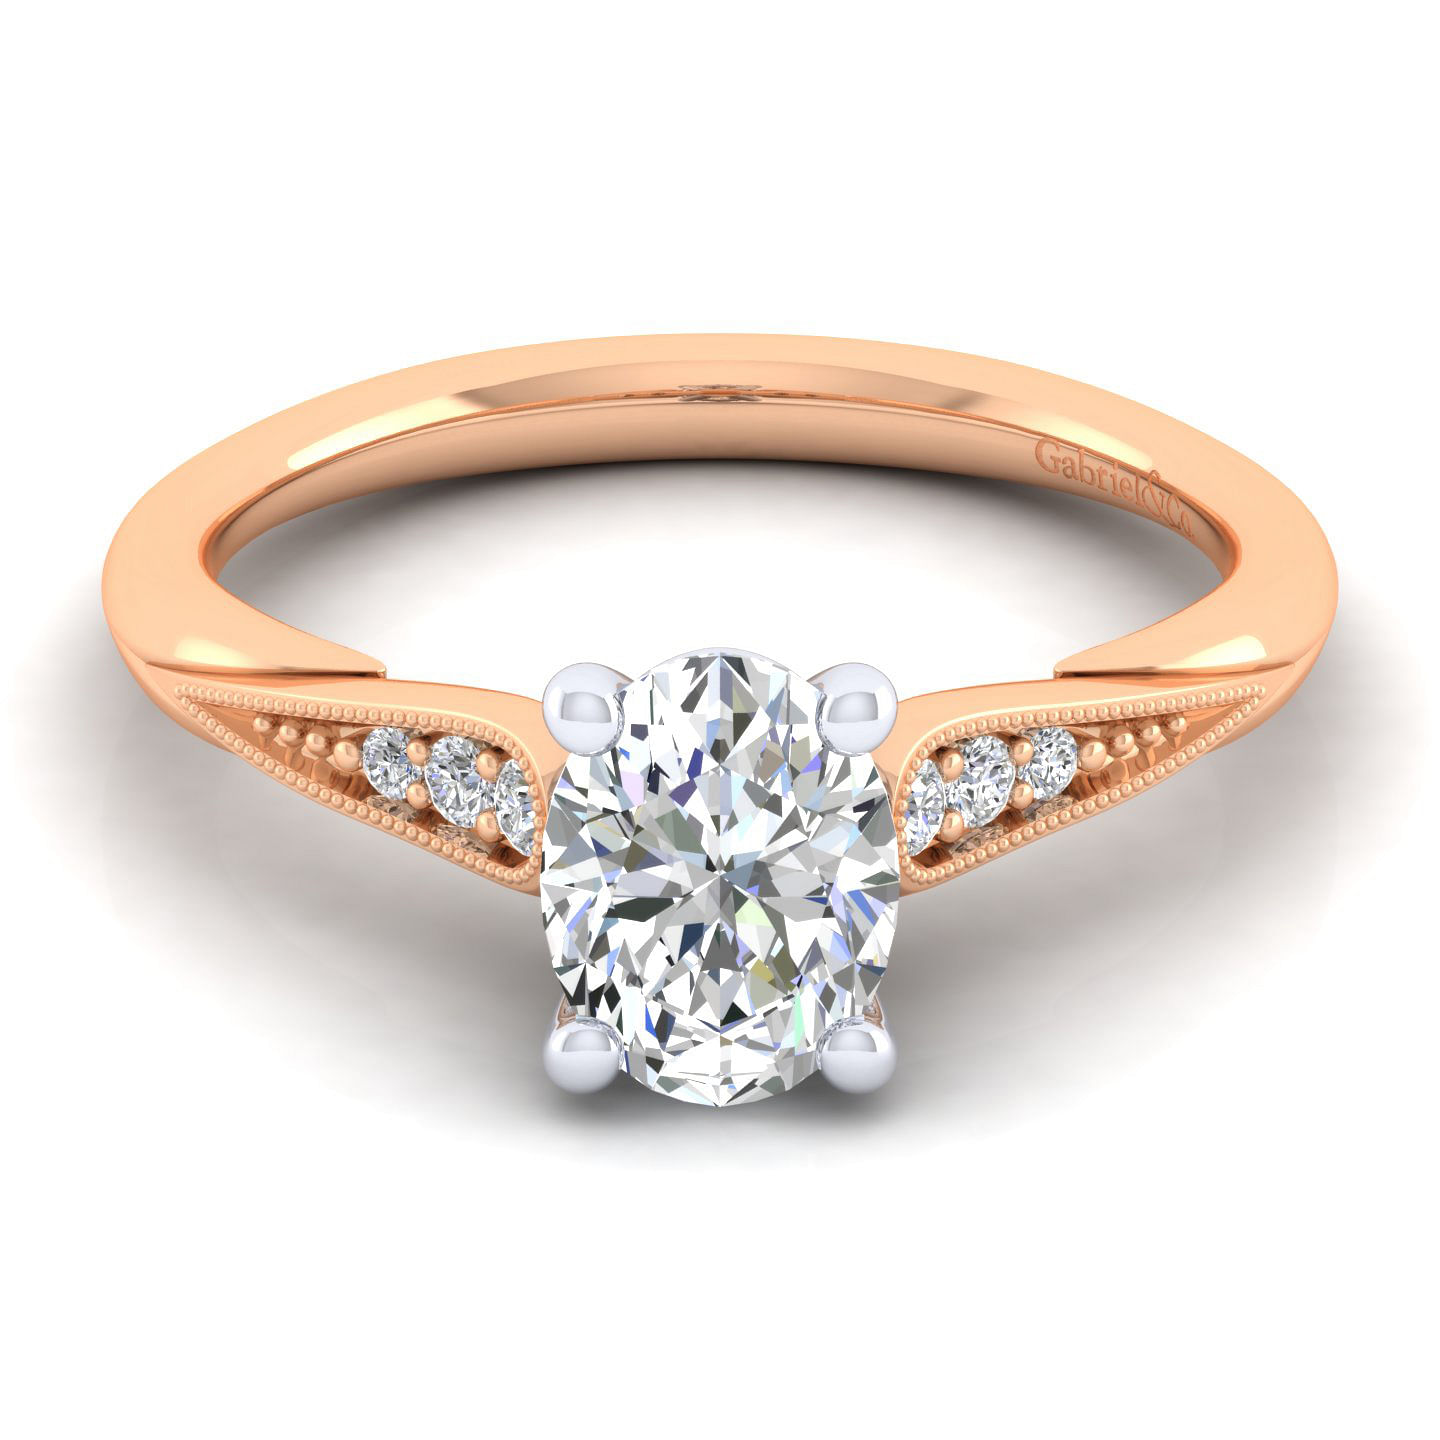 Riley - 14K White-Rose Gold Oval Diamond Engagement Ring